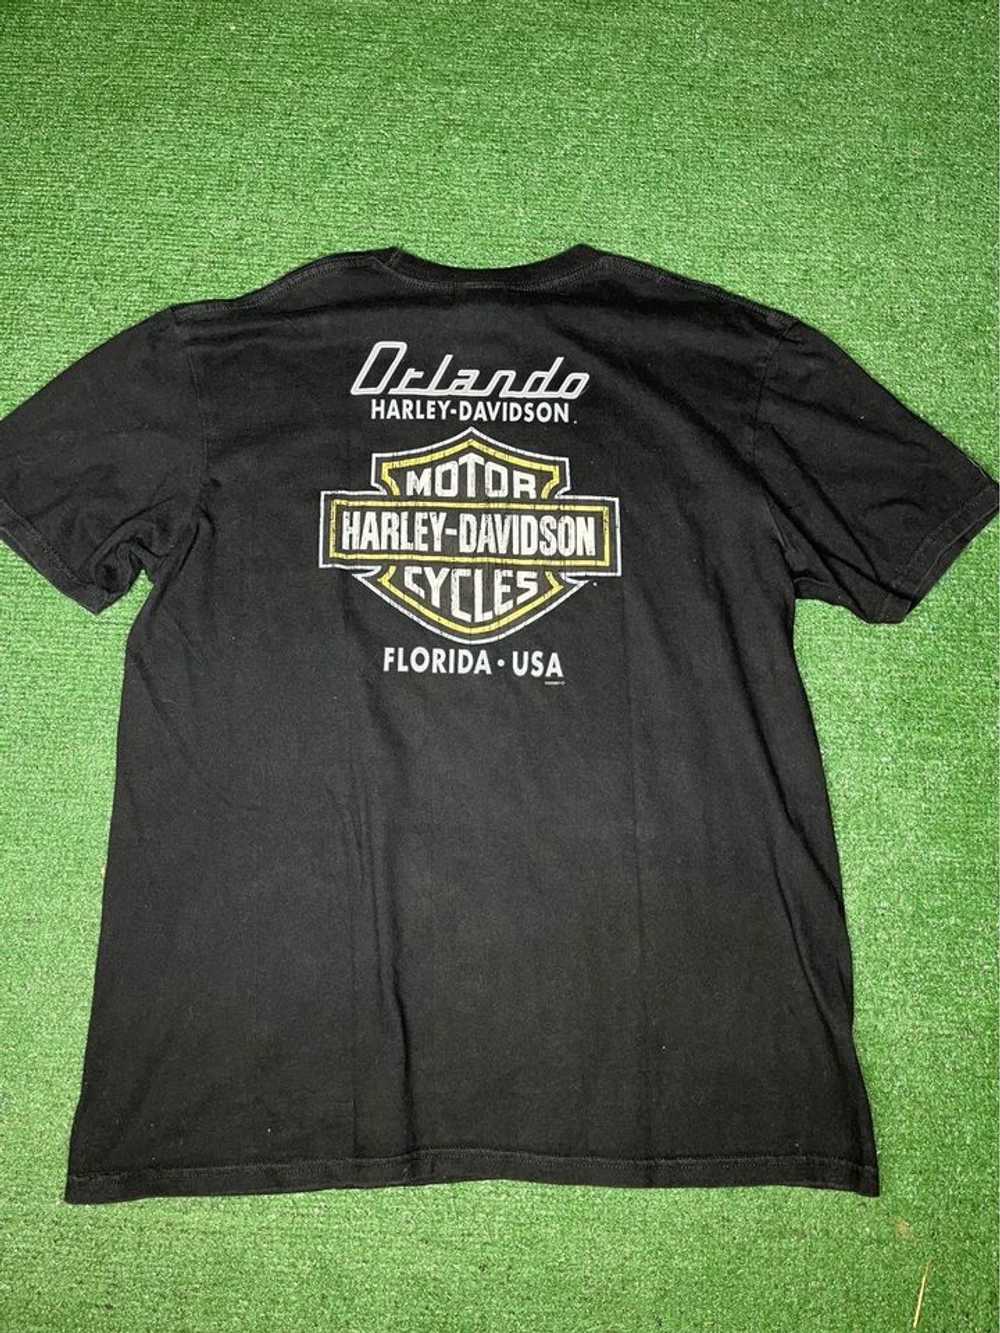 Harley Davidson Harley Davidson T-shirt Size XL - image 5